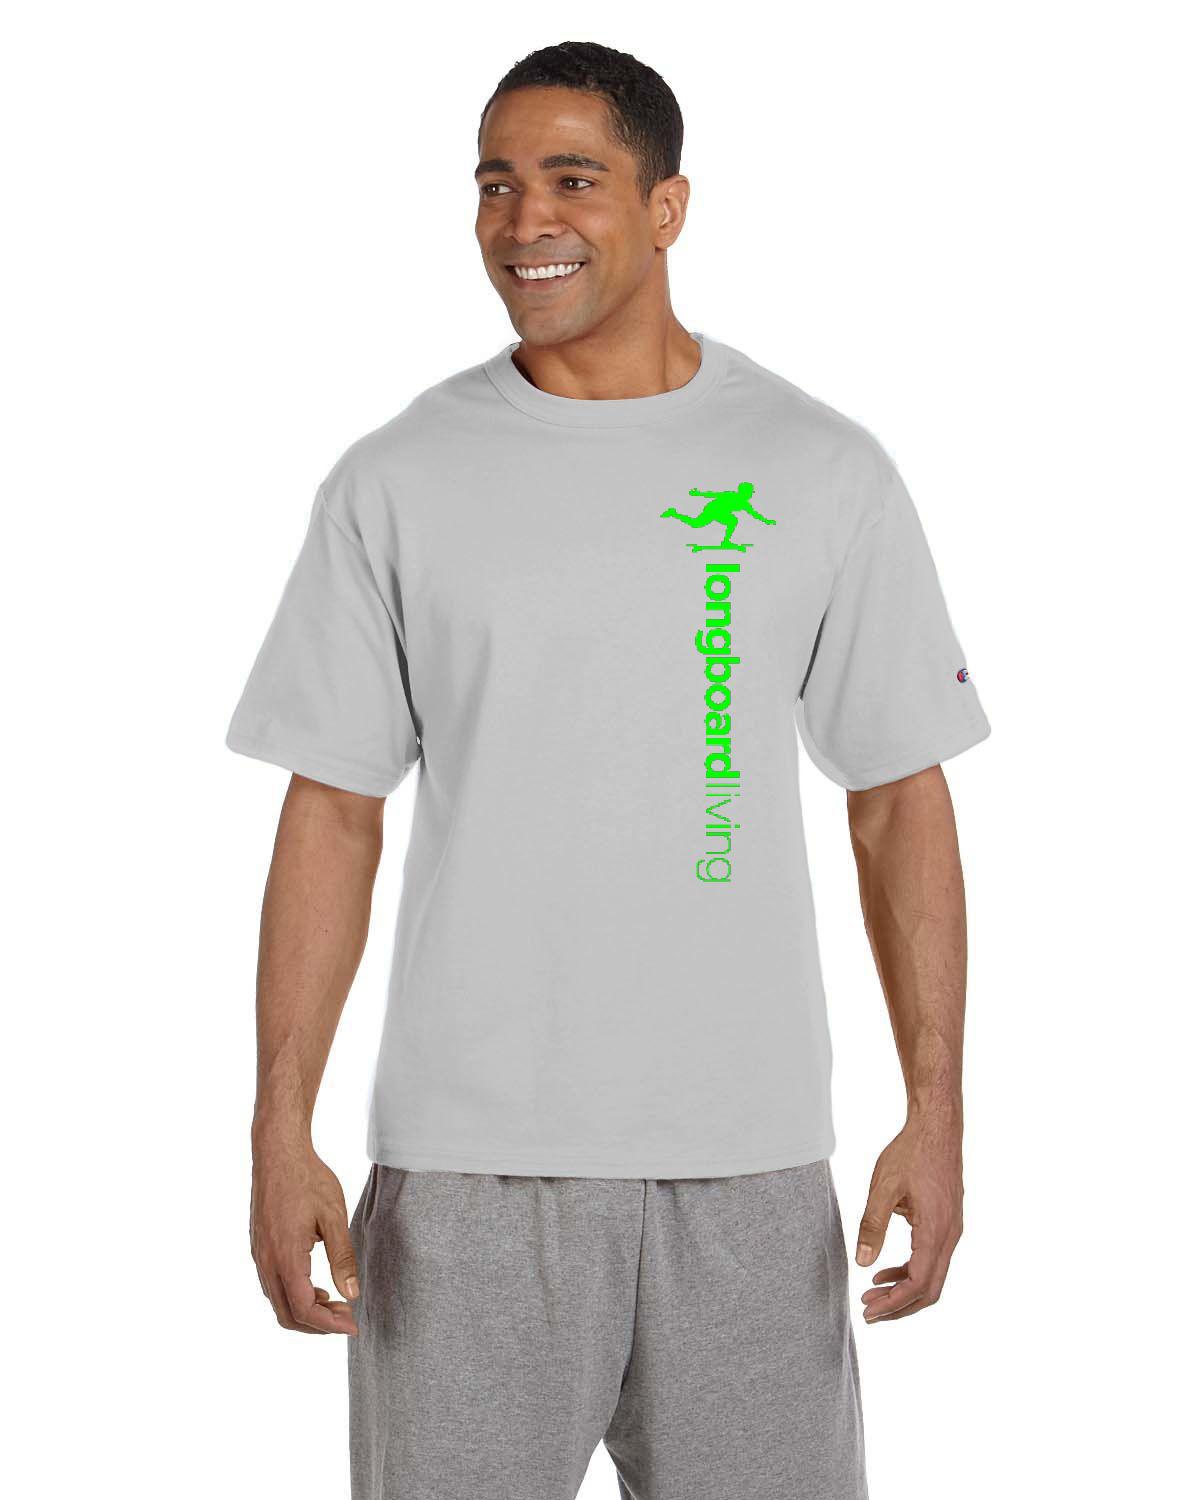 Longboard Living Vertical Logo Shirt - Green Print on CHAMPION